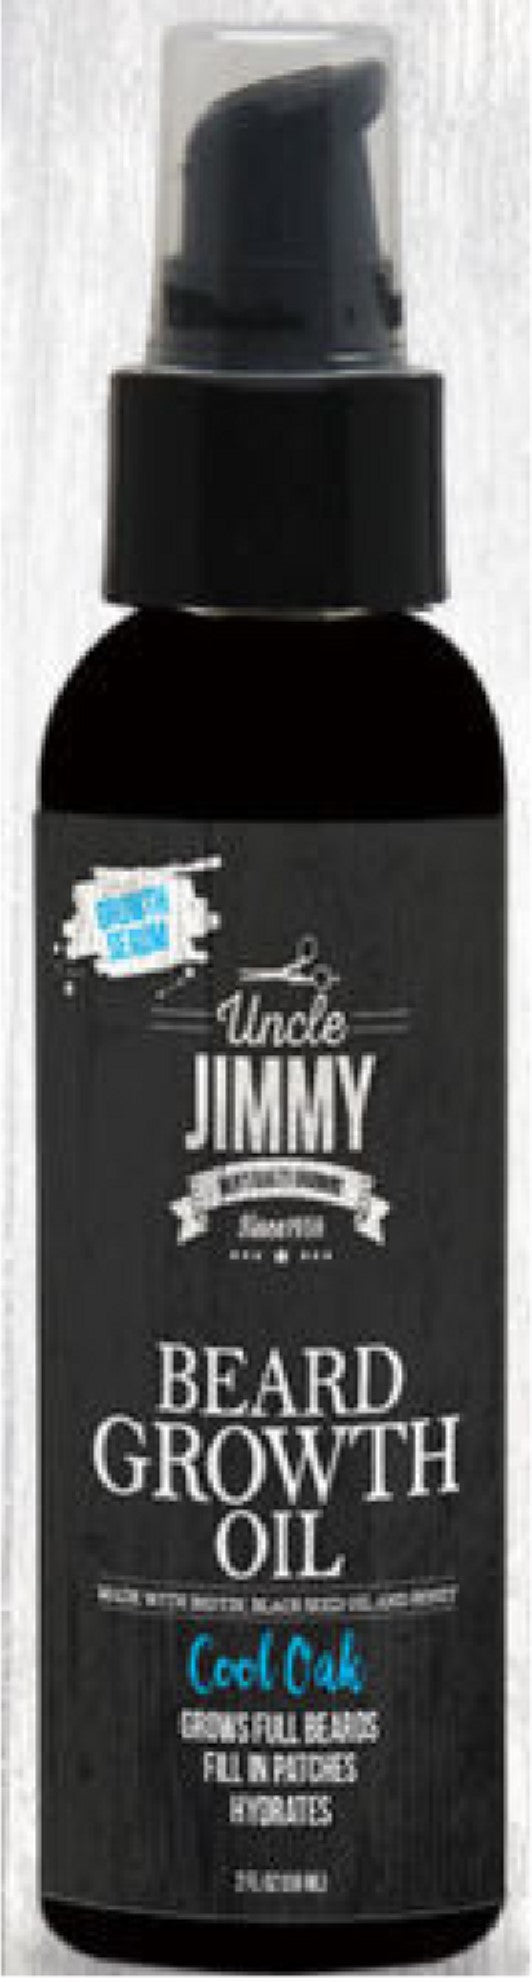 Uncle Jimmy Beard Growth Oil 2 oz